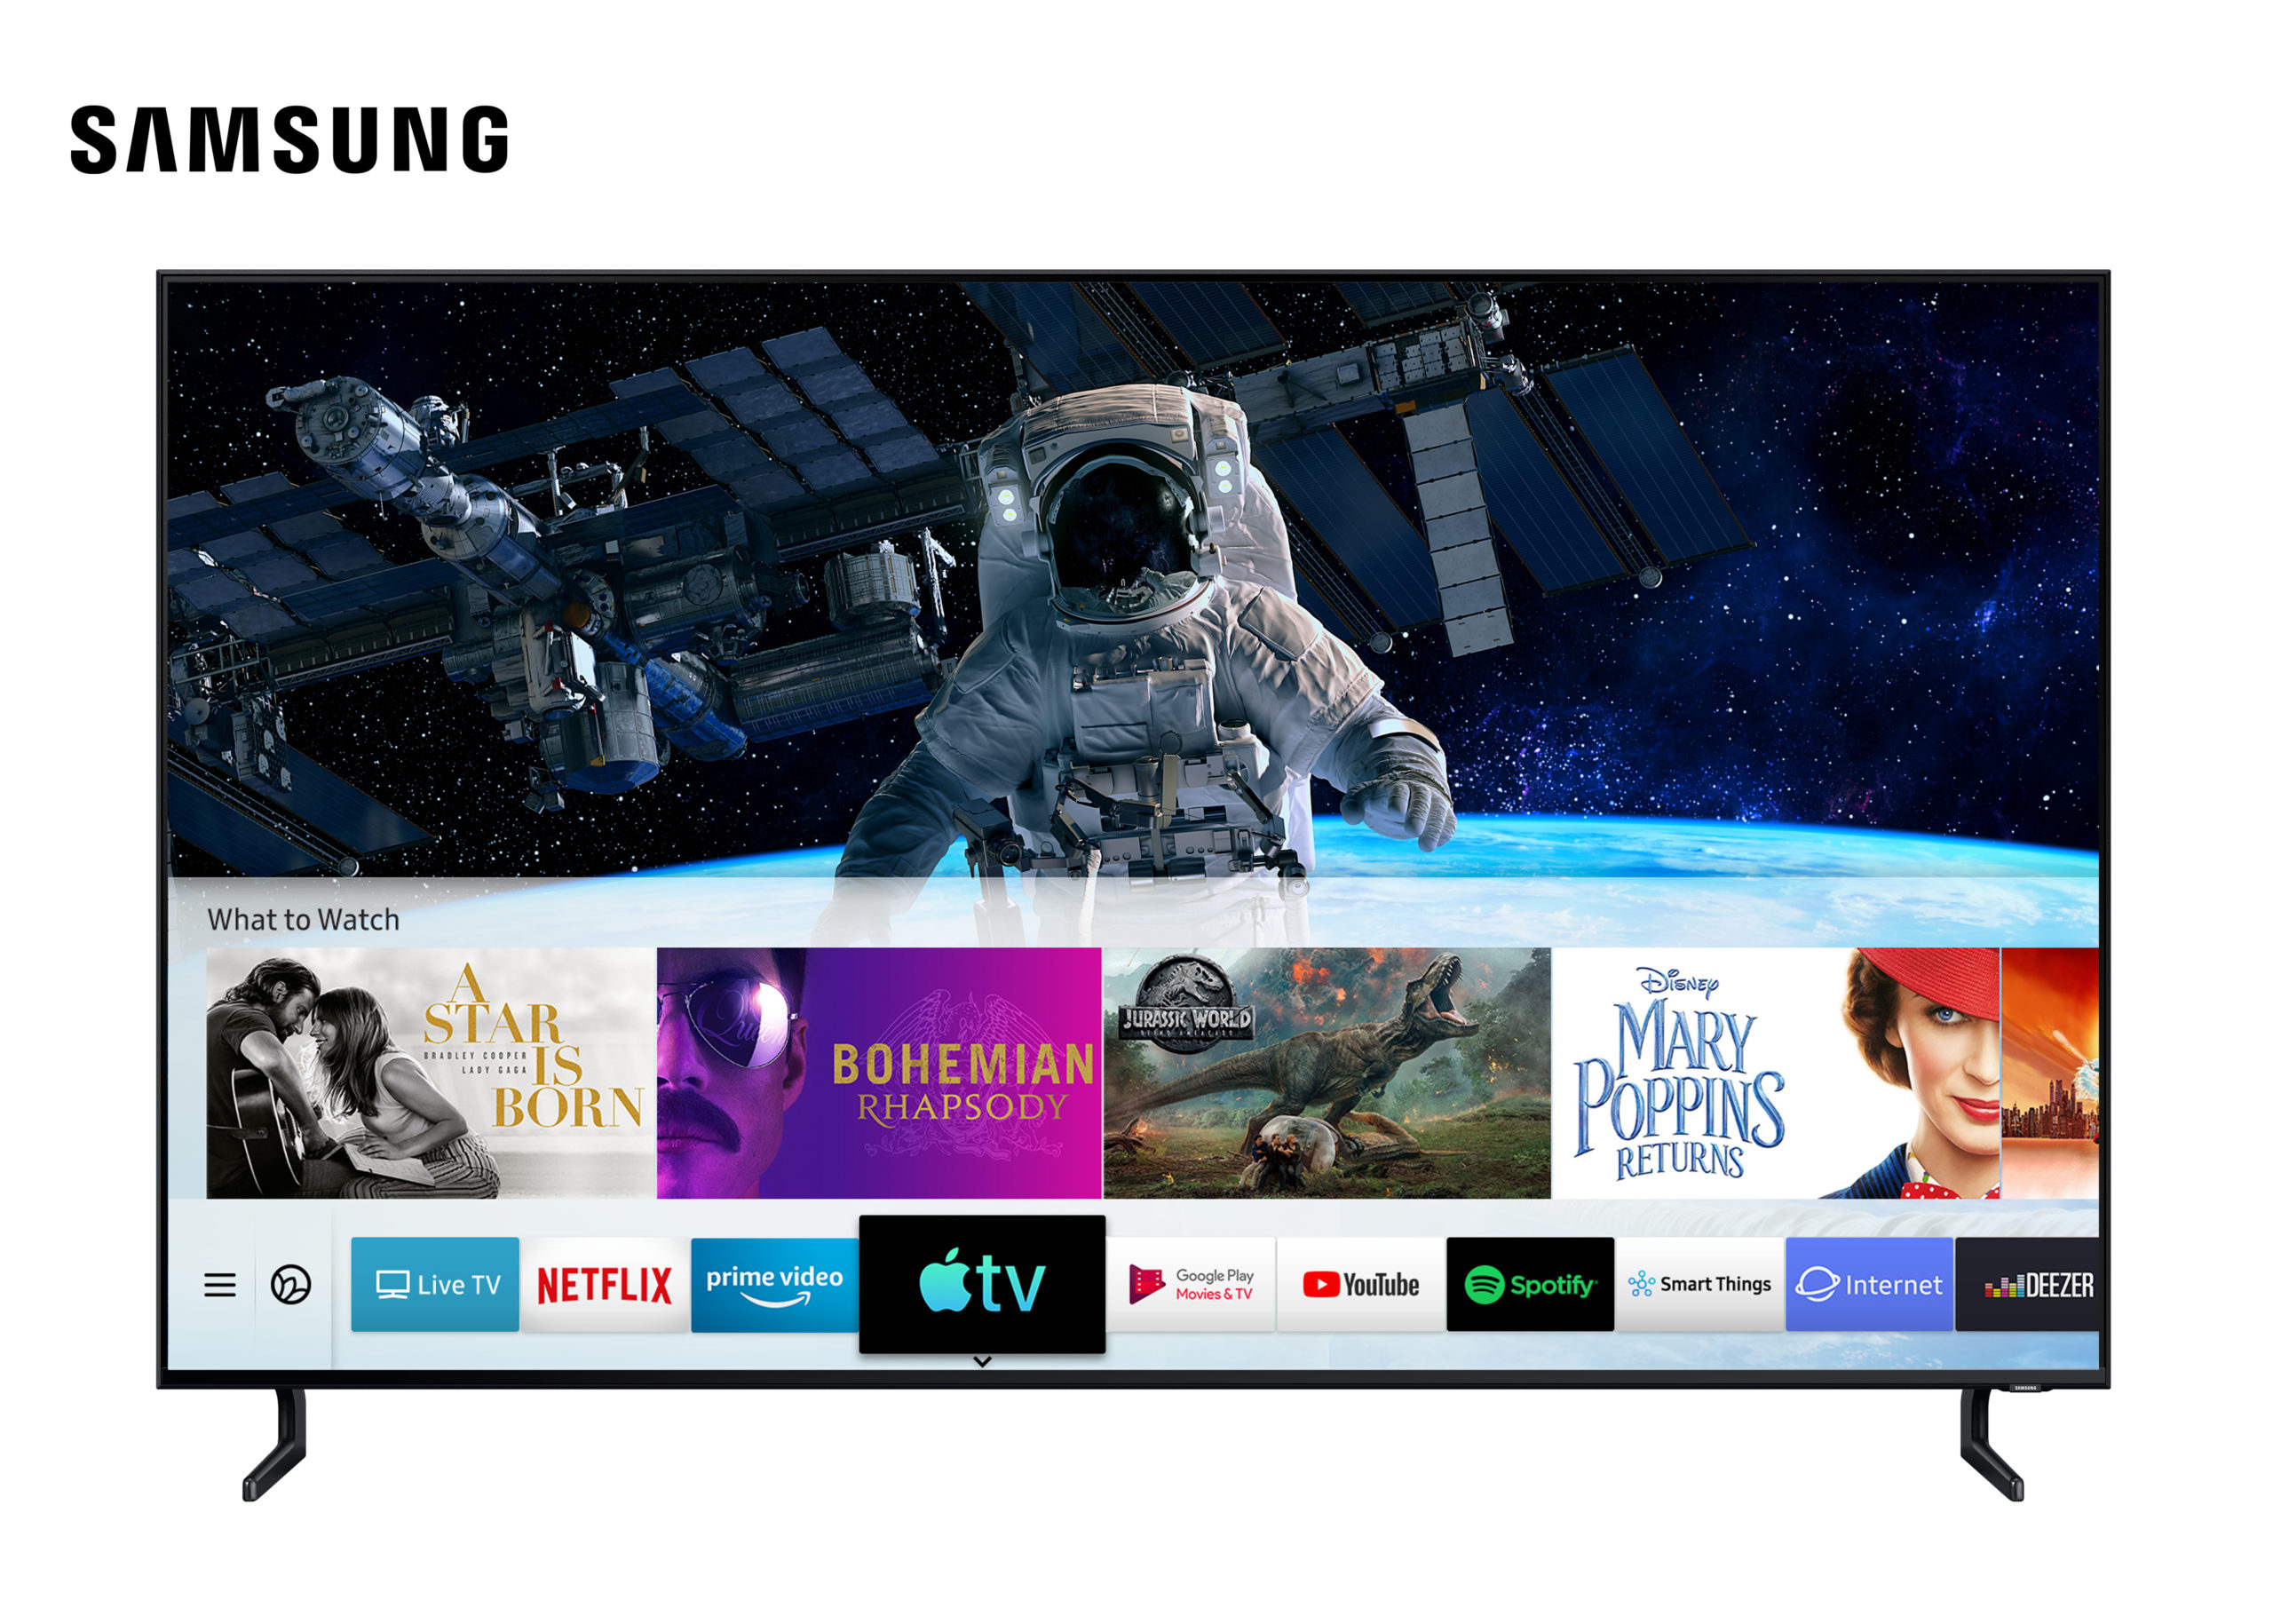 Samsung Apple TV App